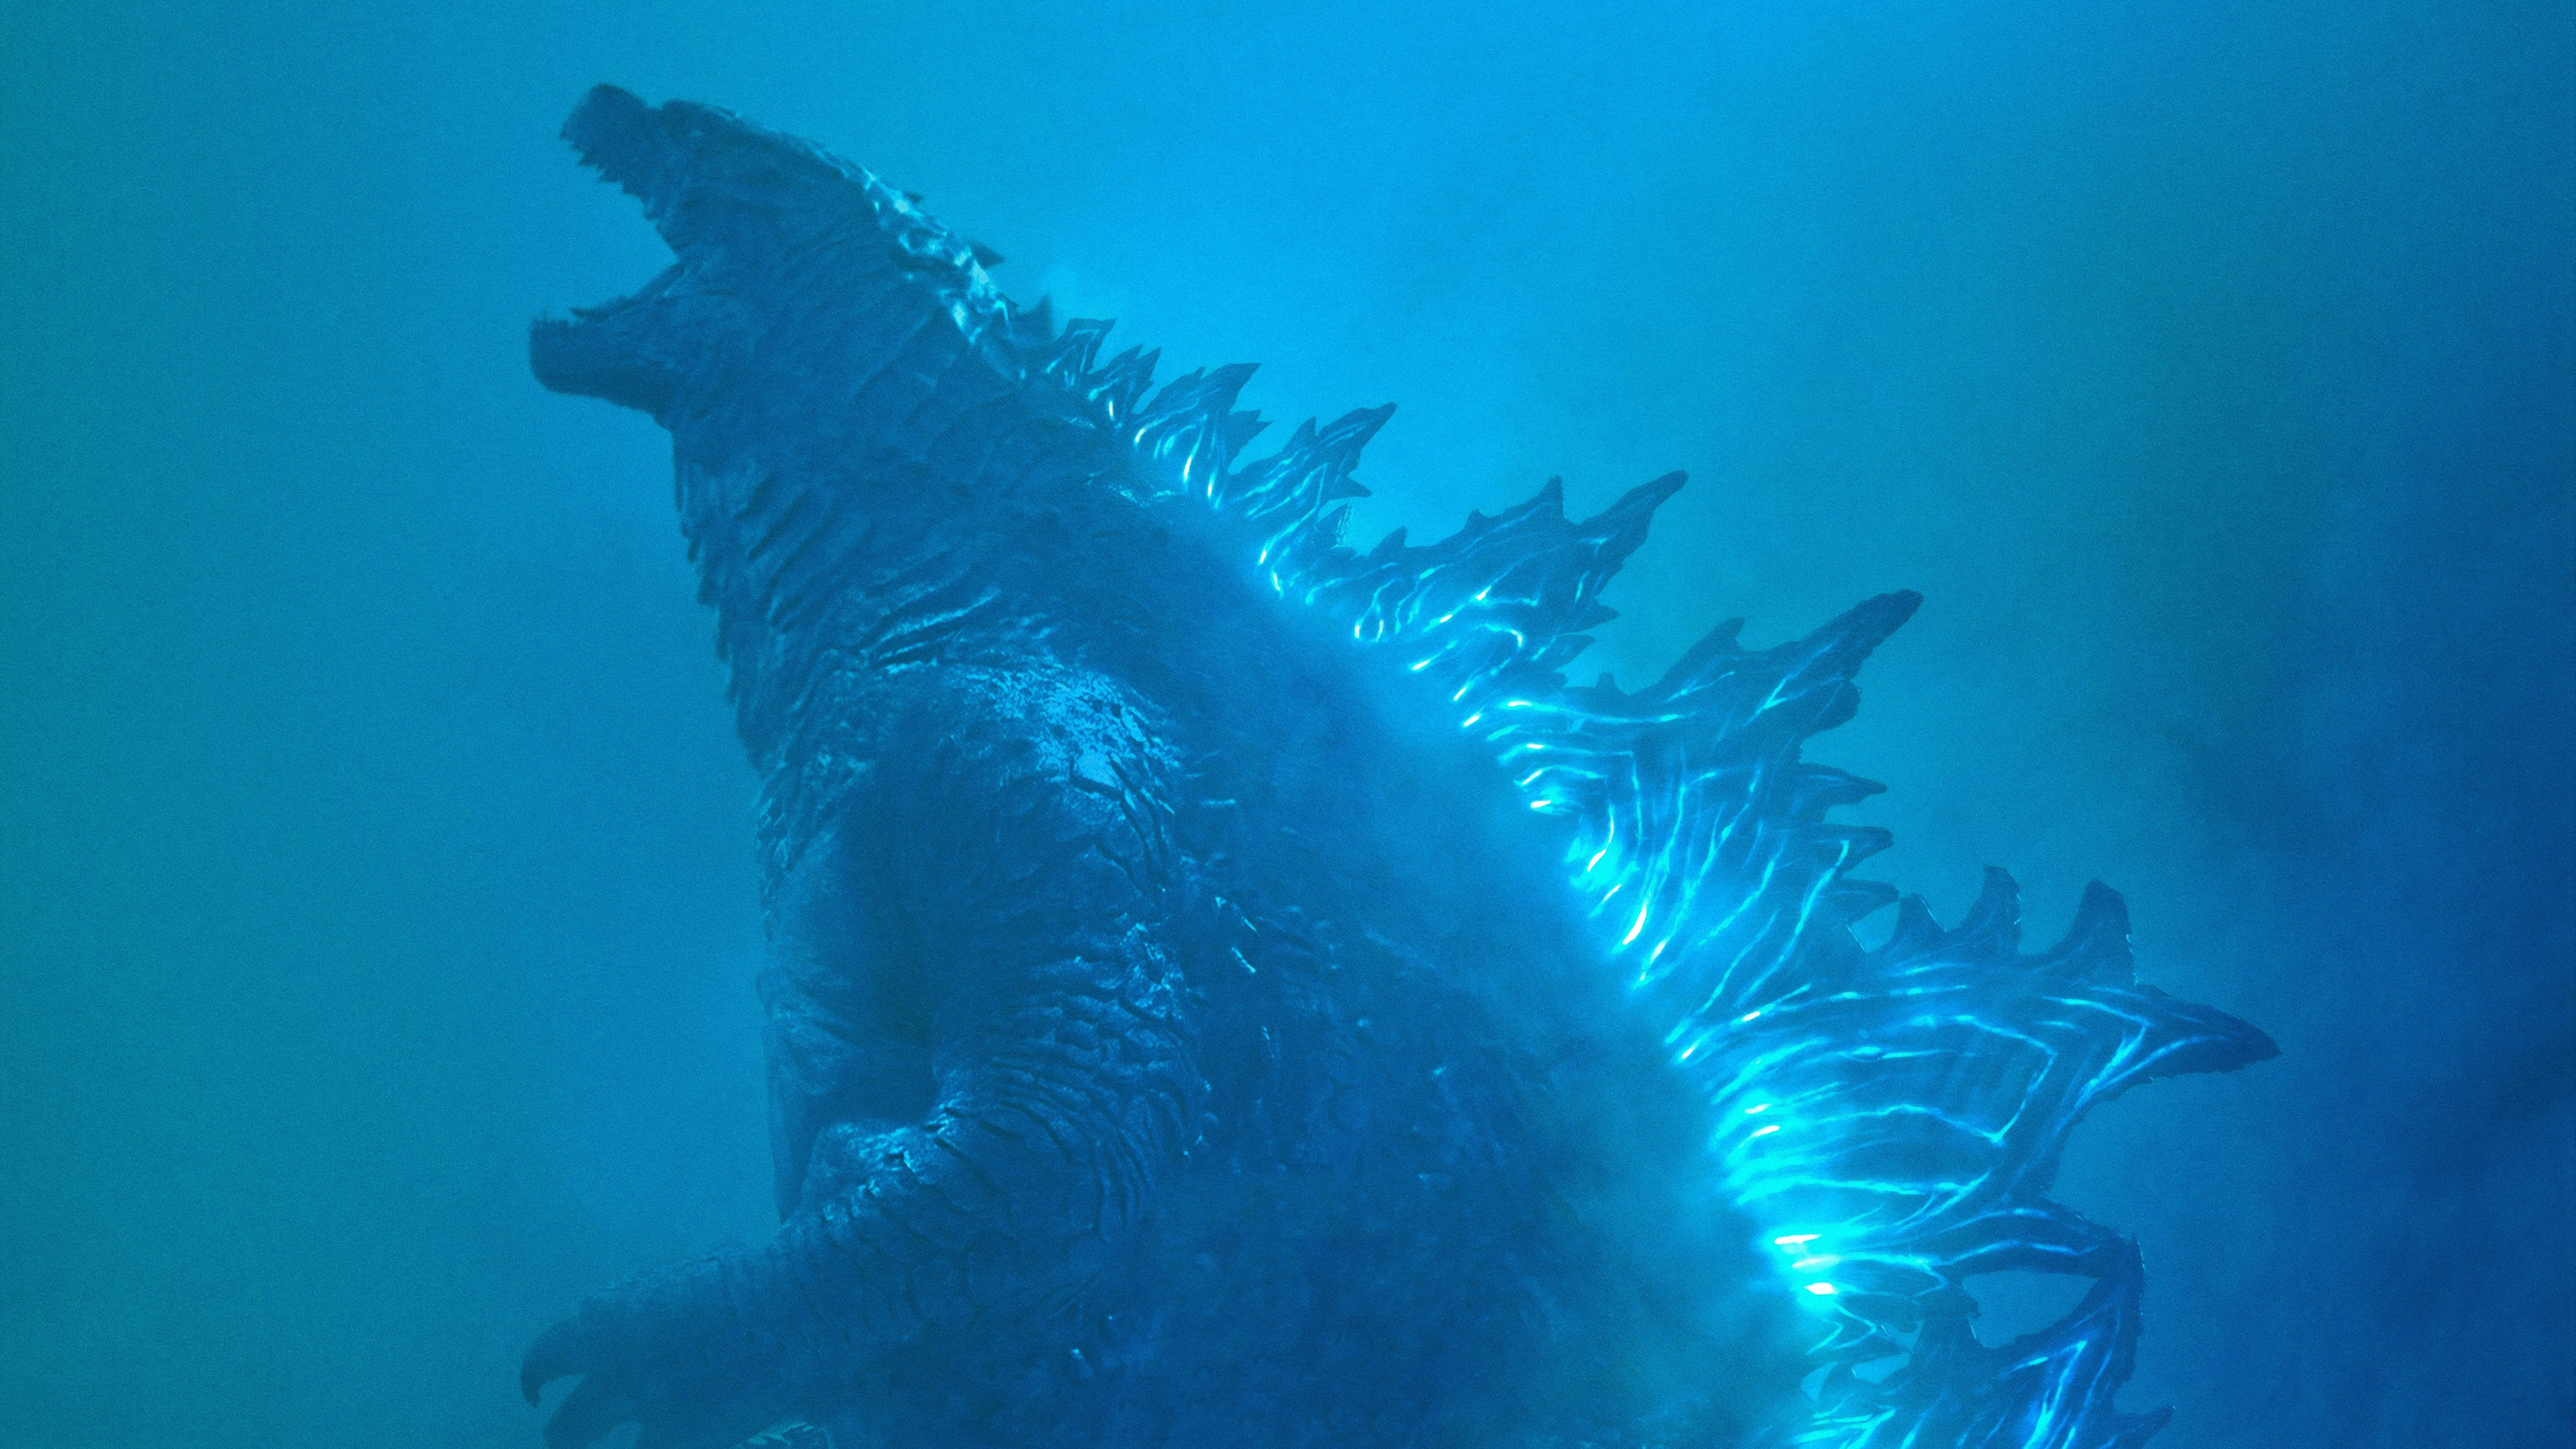 Godzilla King of the Monsters 2019 5K